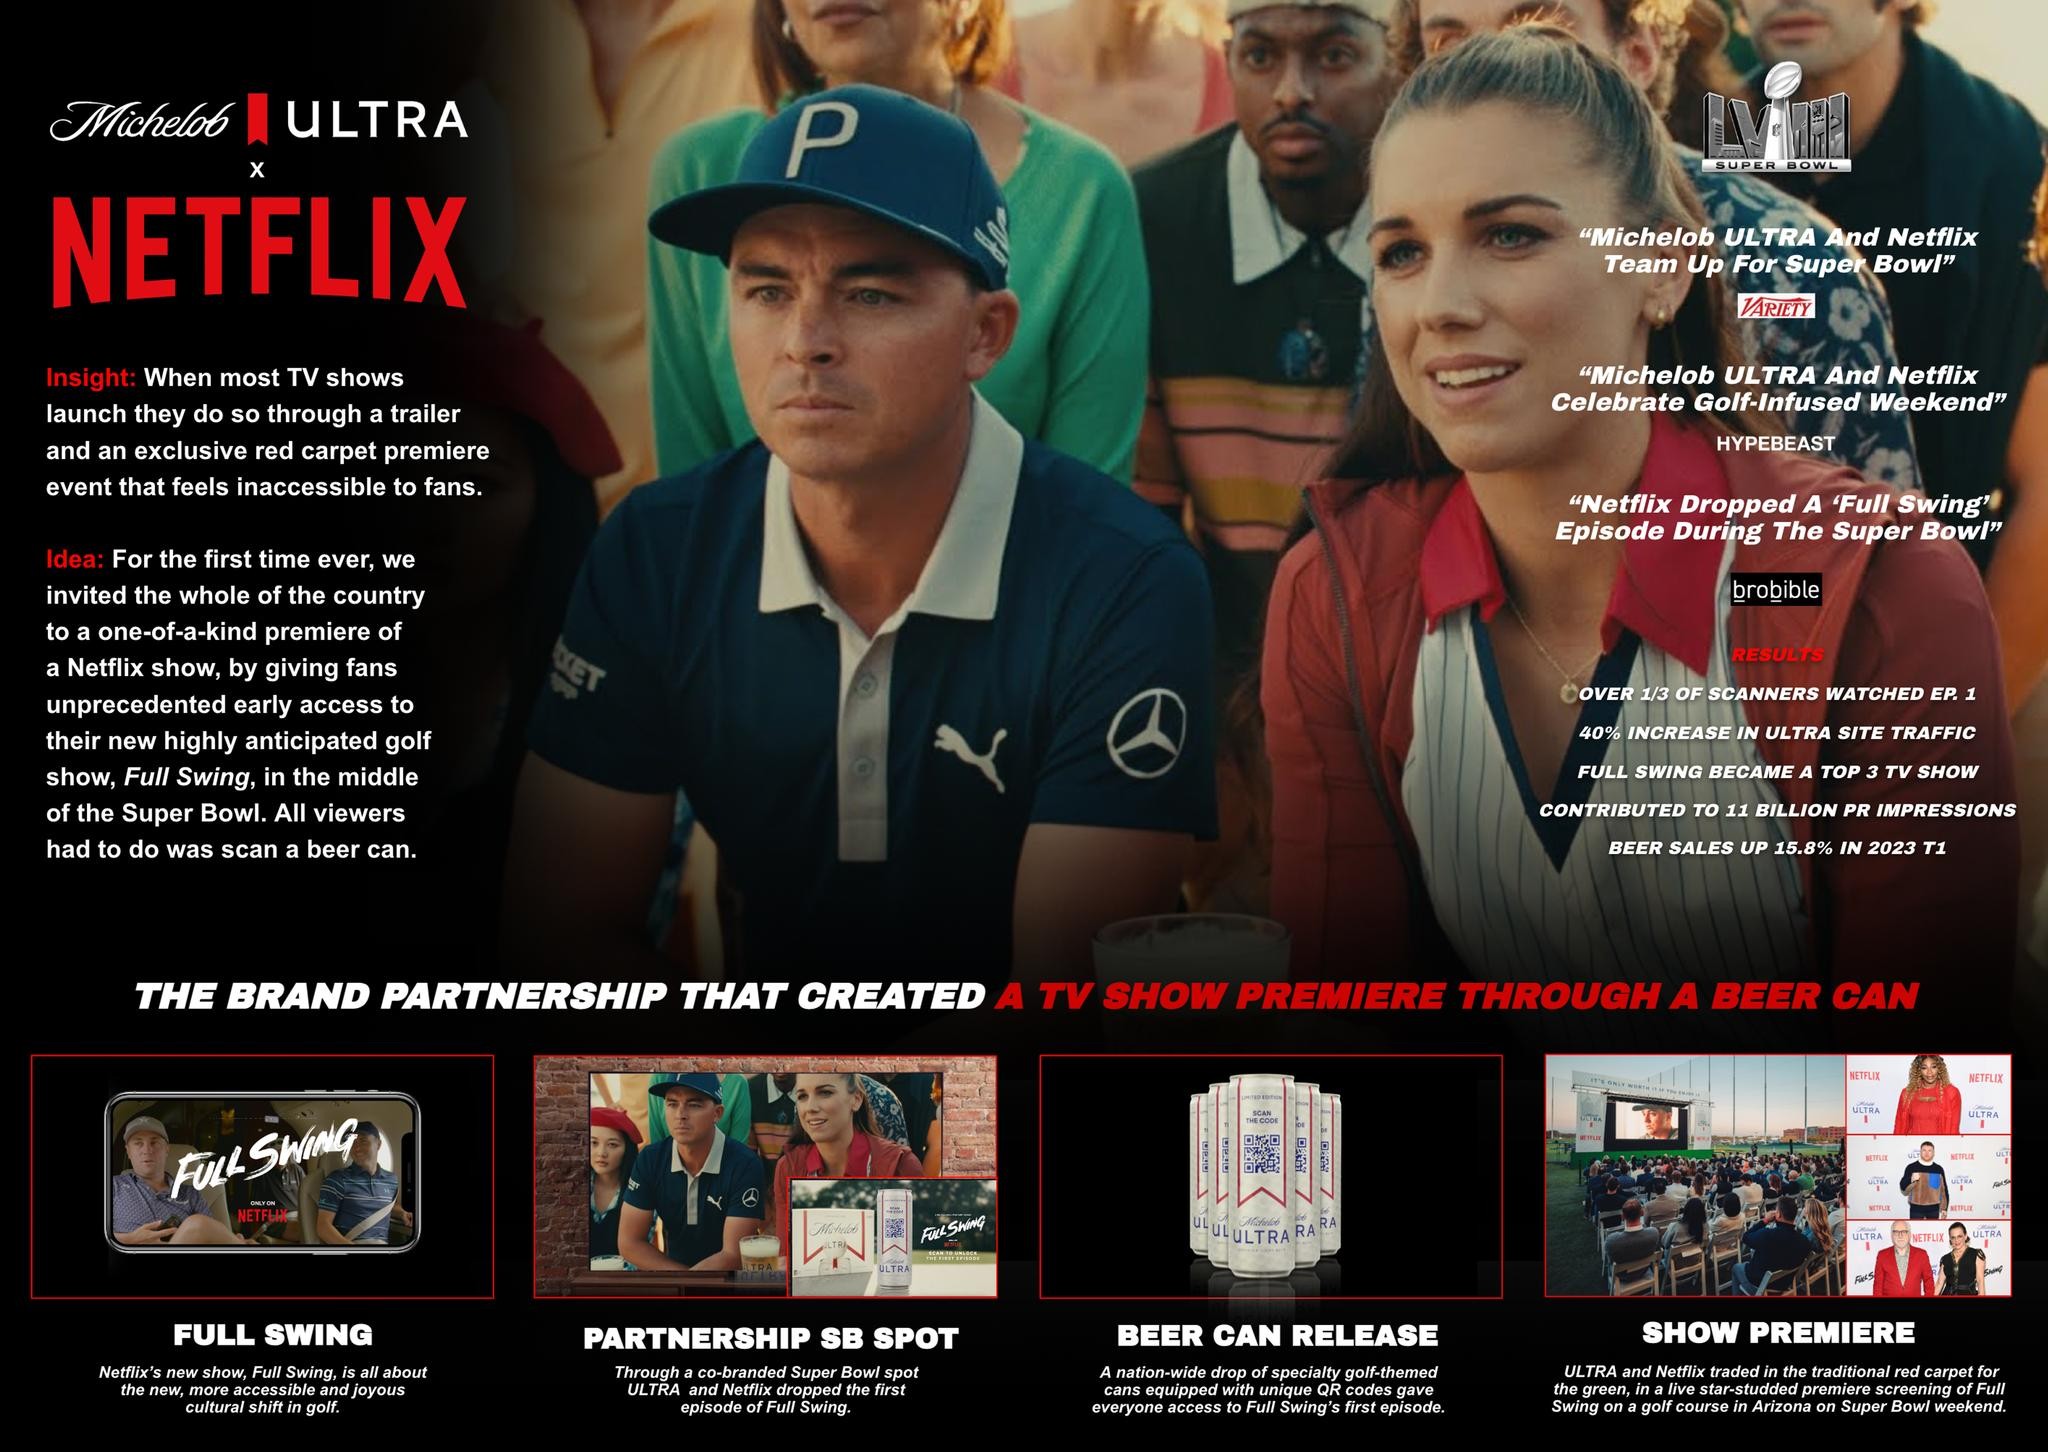 Michelob ULTRA x Netflix Partnership